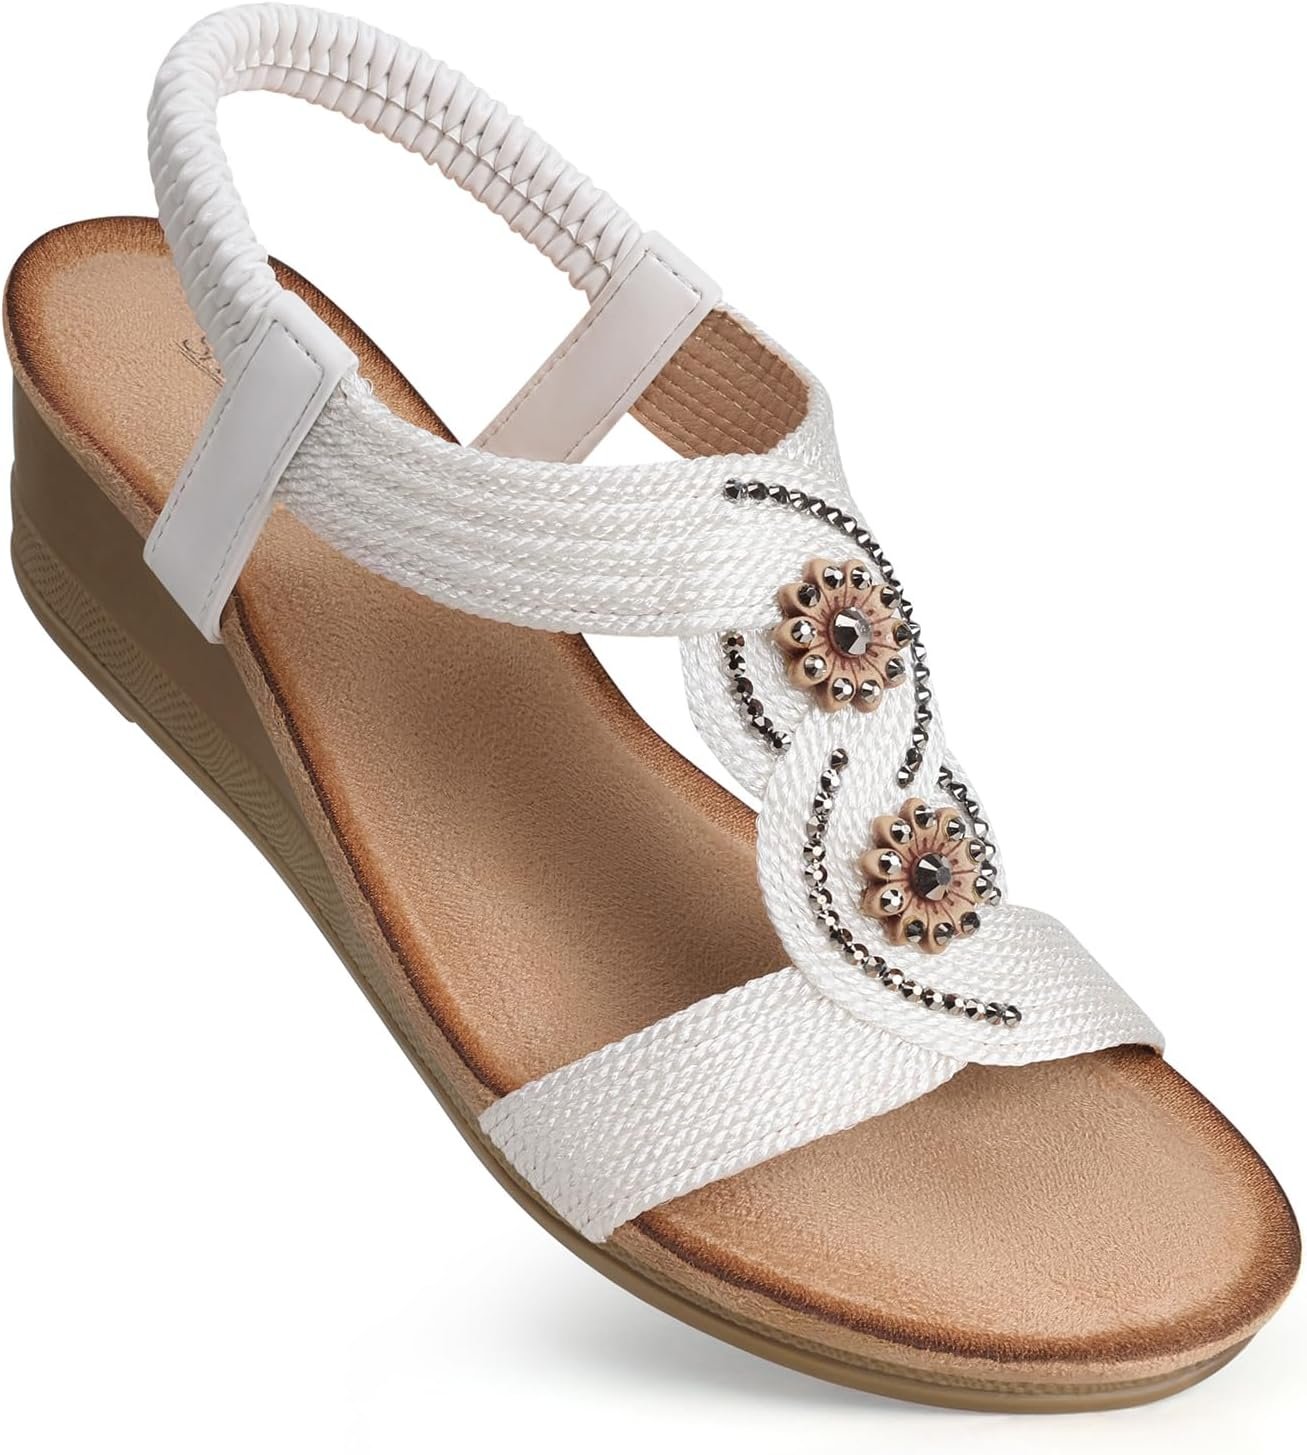 SHIBEVER Womens Sandals Wedge Low: Open Toe Elastic Ankle Strap Wedge Sandal - Dressy Sandals Women - Comfortable Summer